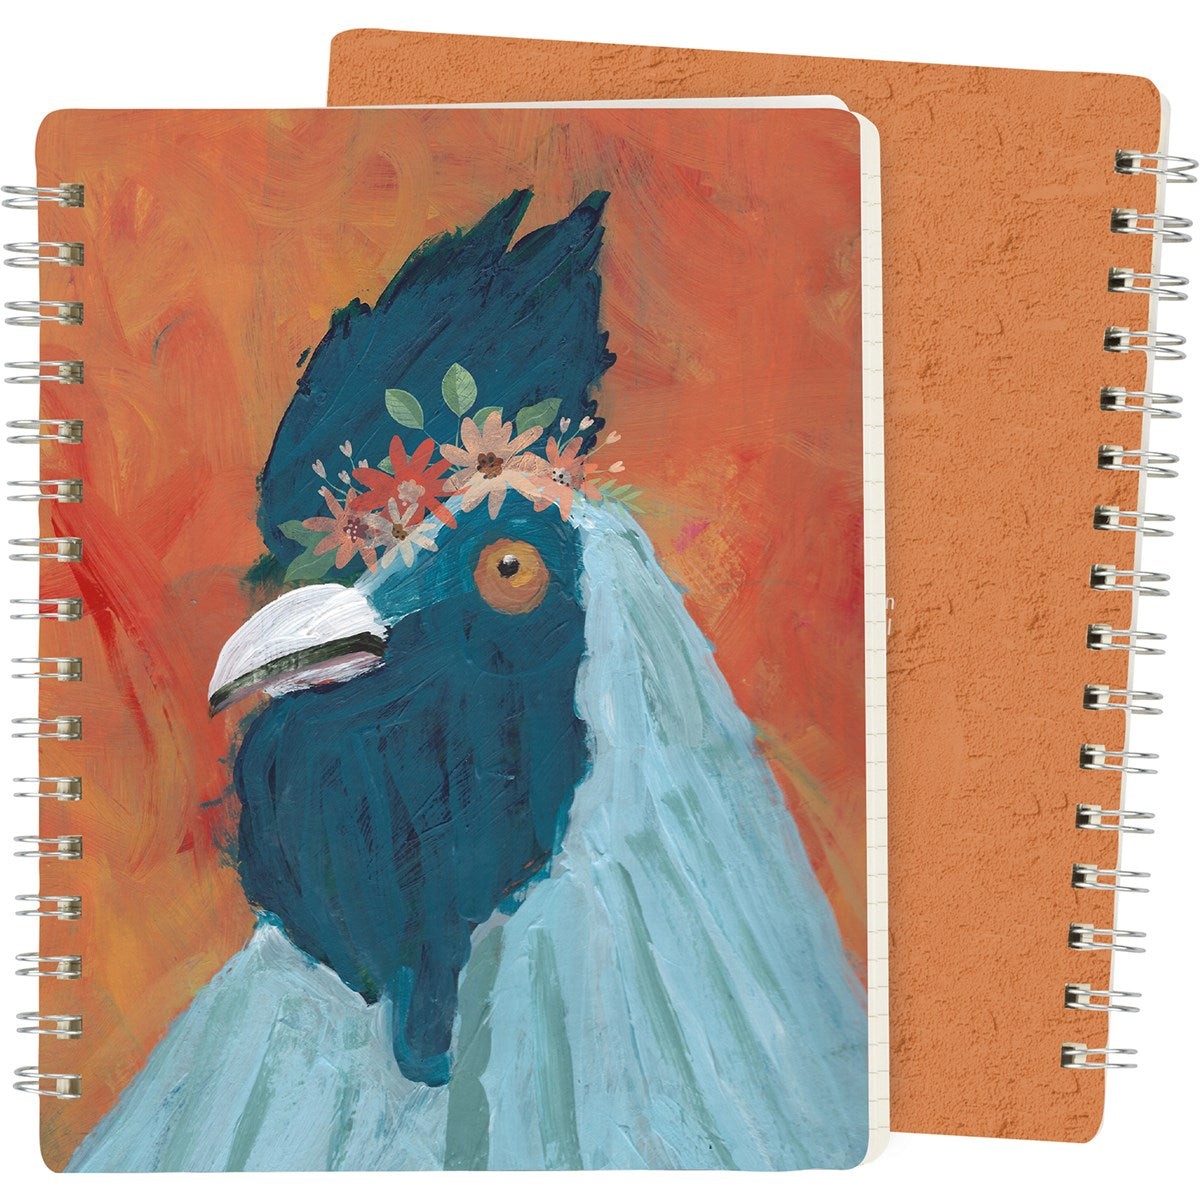 Rooster - Spiral Notebook